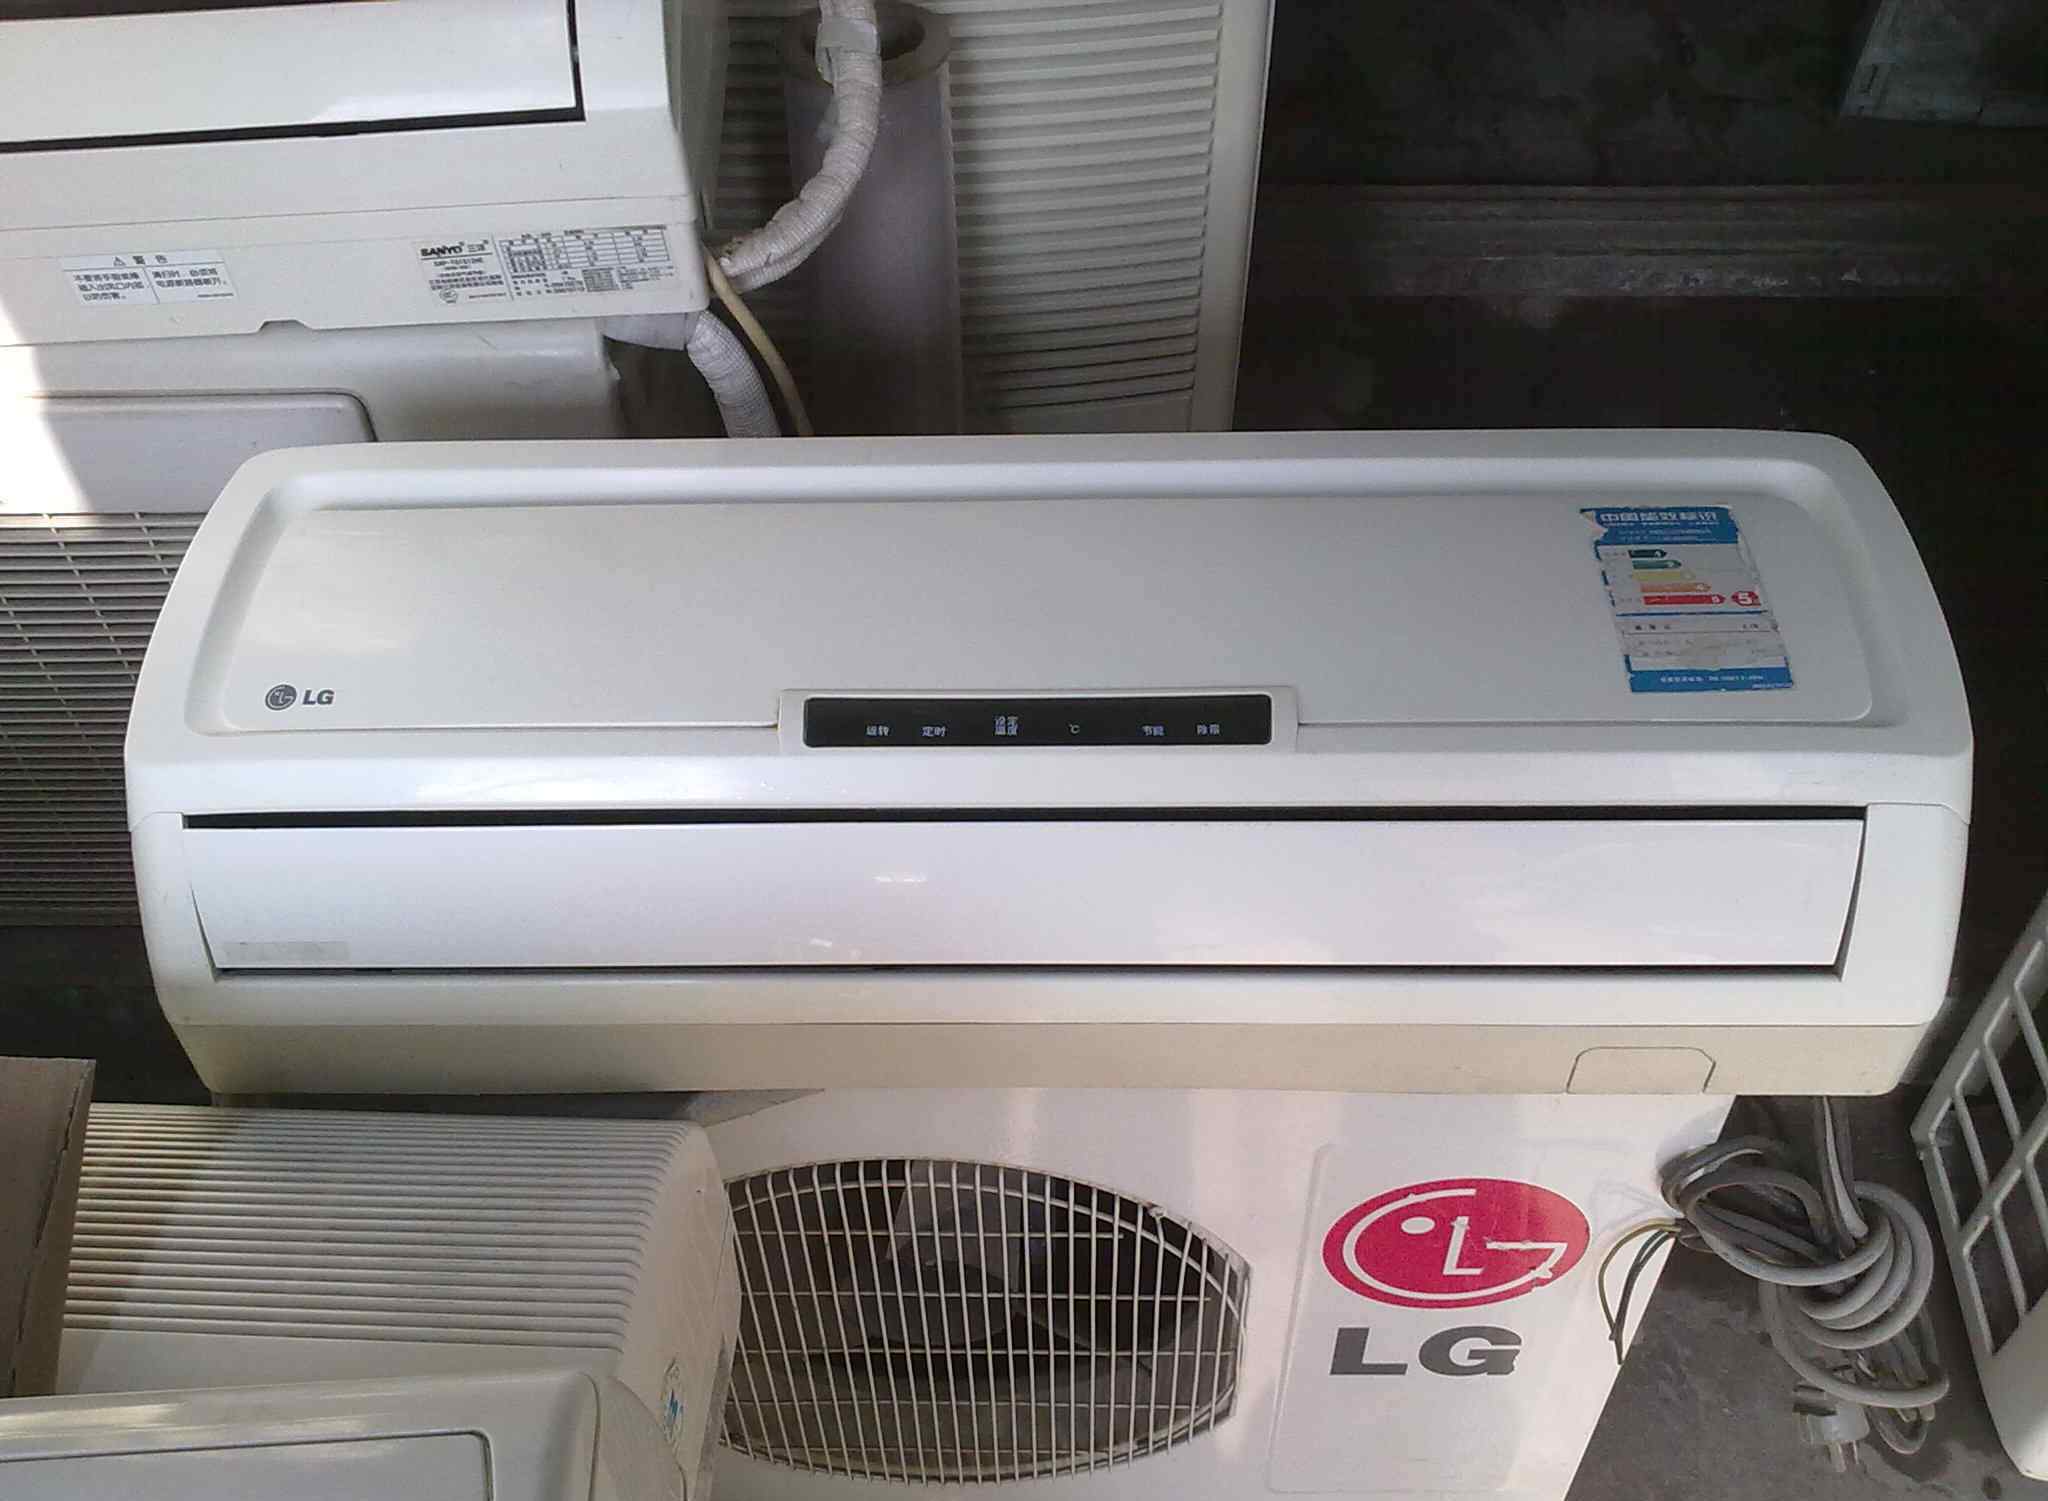 lg空调质量 lg空调怎么样 LG空调的品牌优势